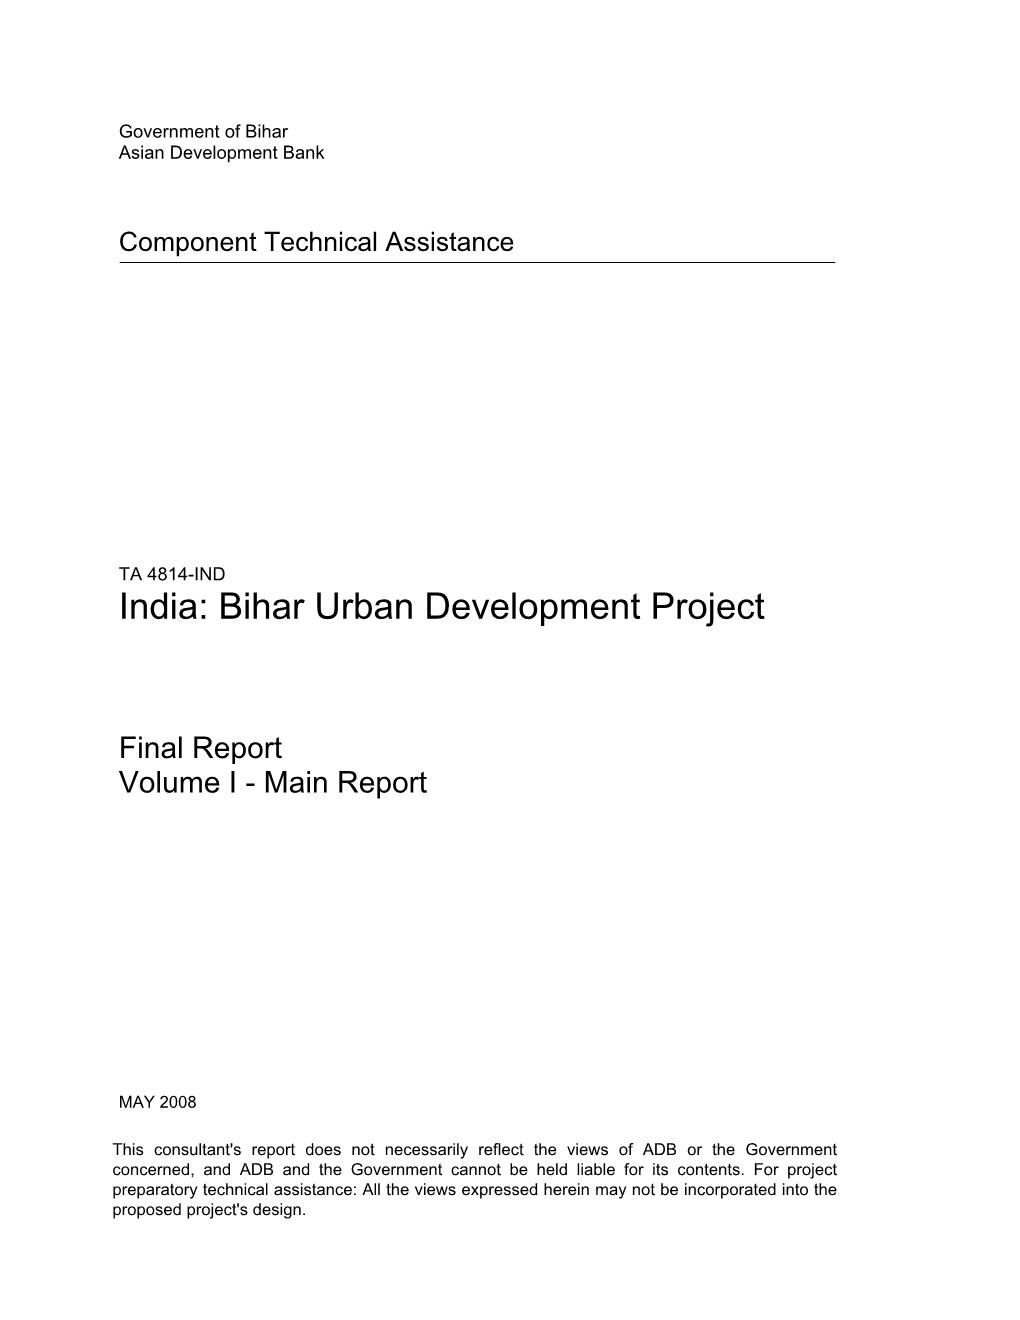 TACR: India: Bihar Urban Development Project